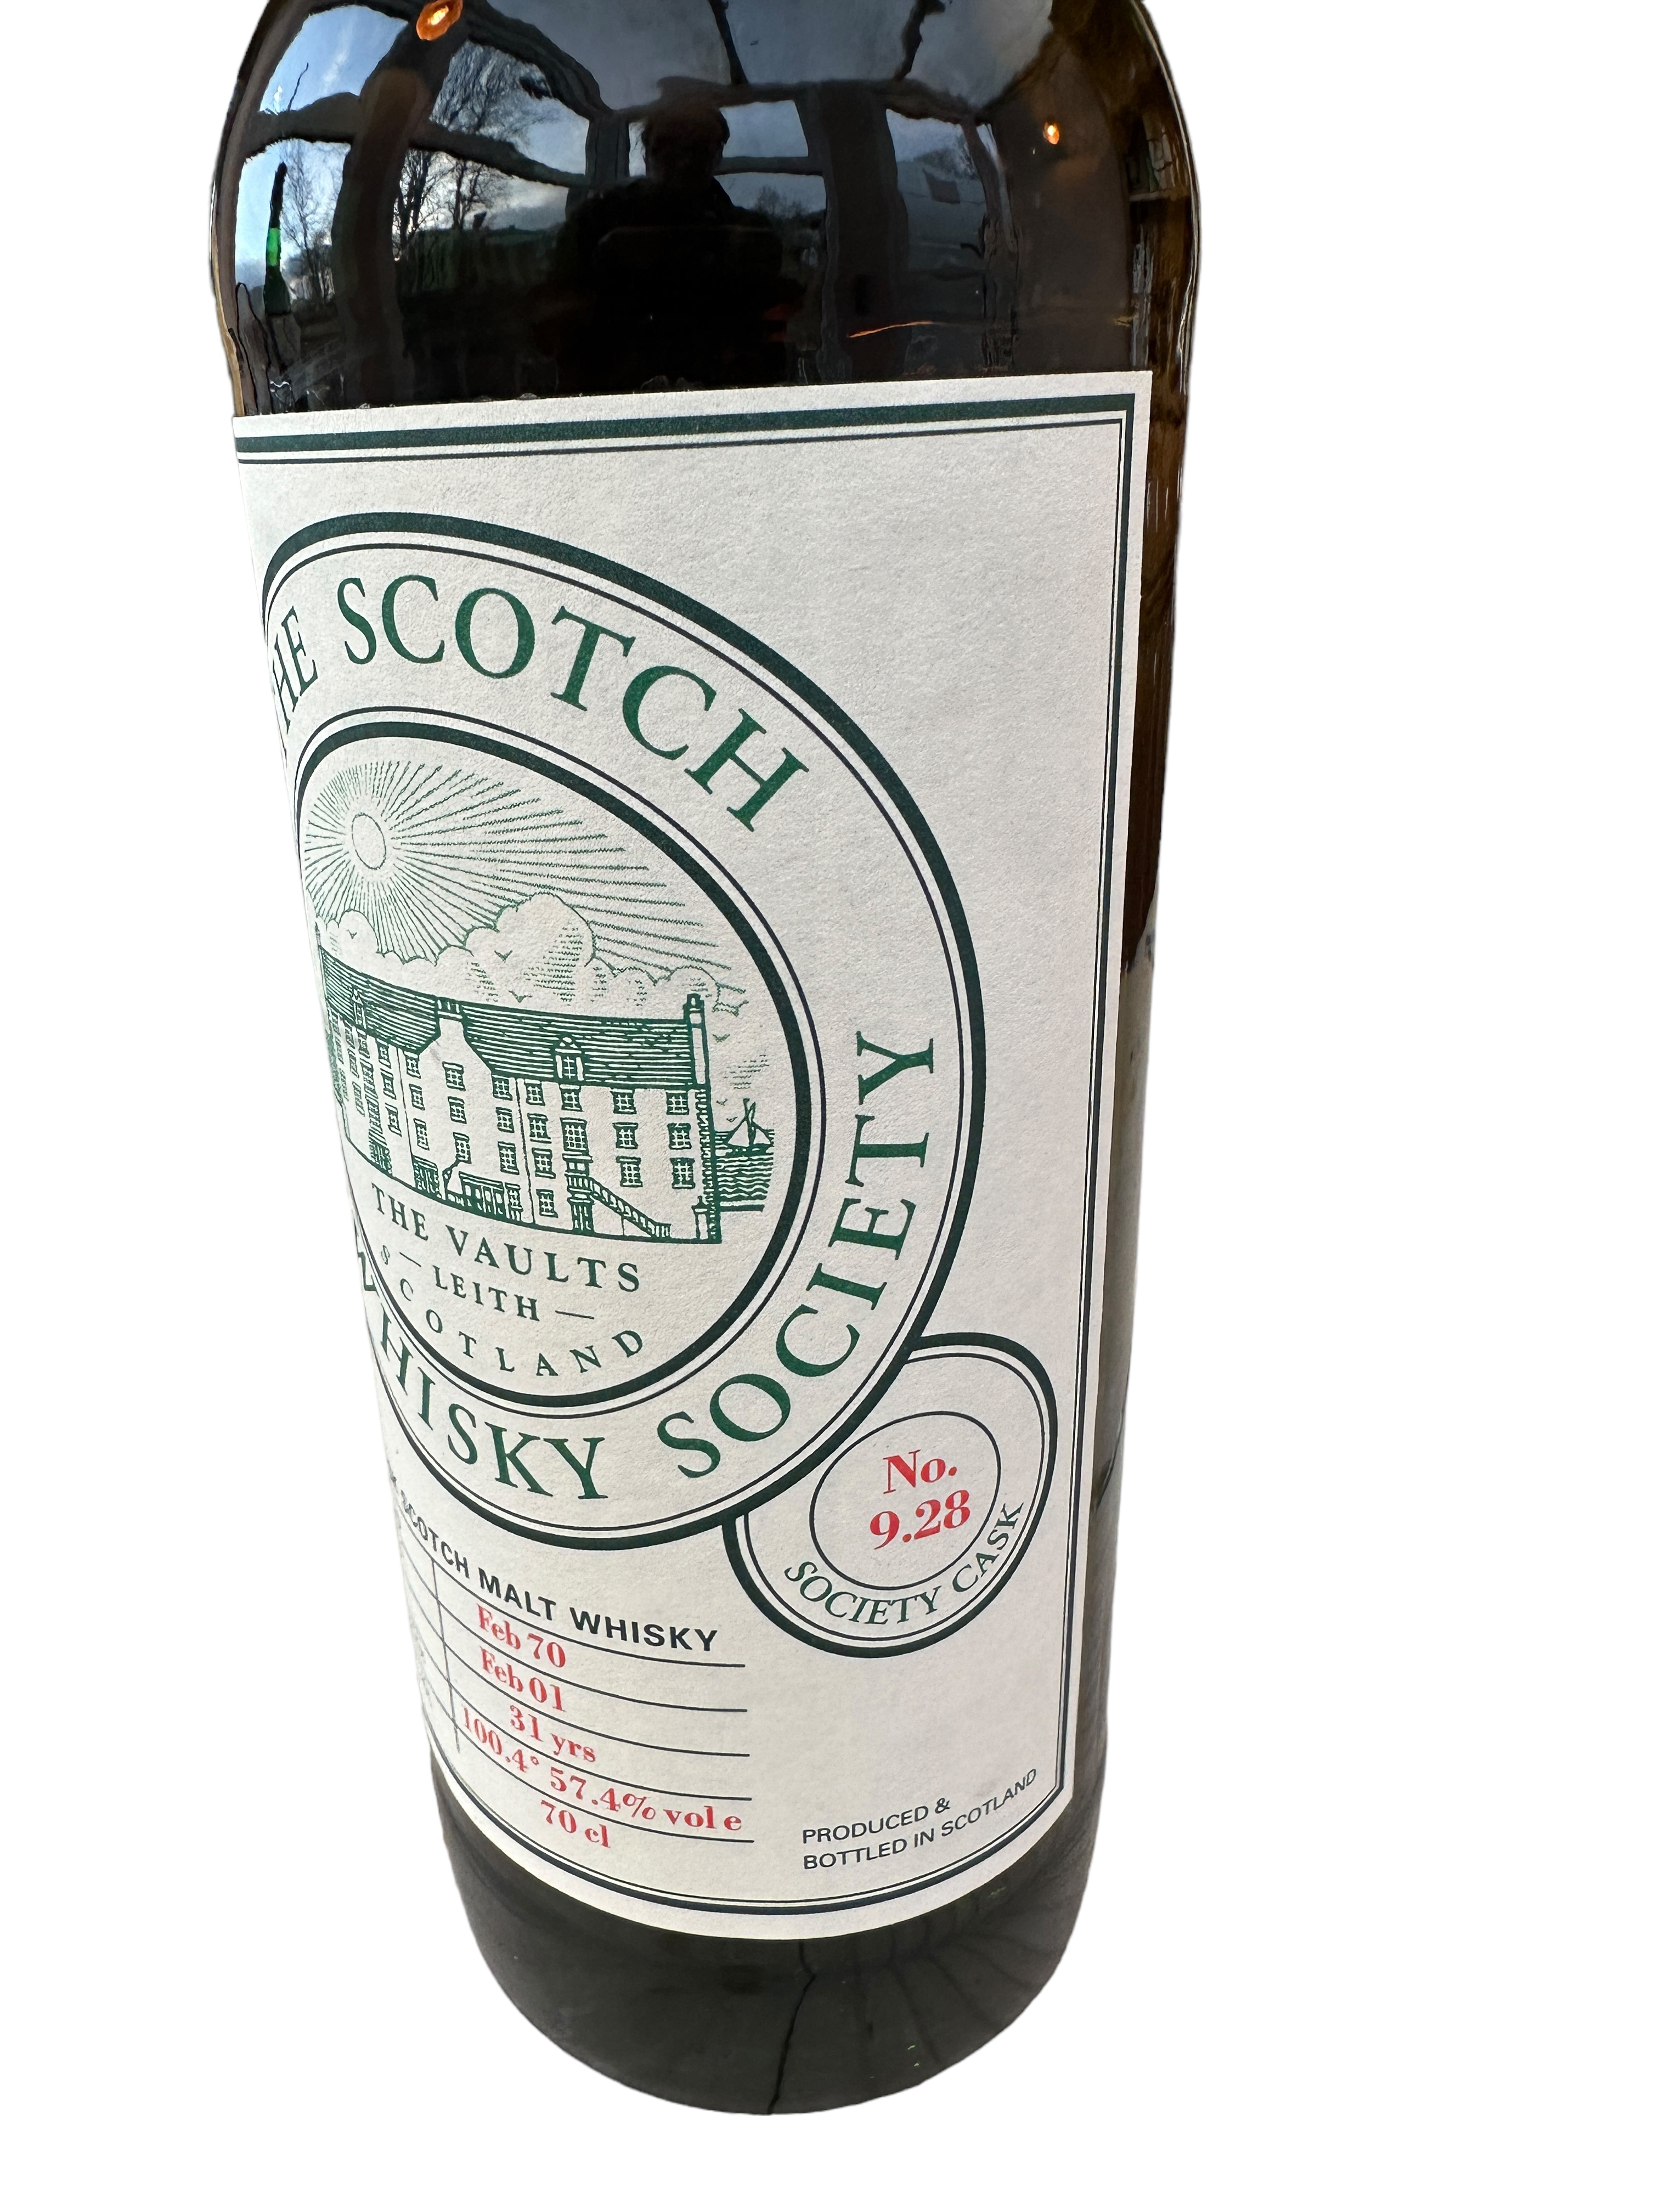 The Scotch Malt Whisky Society - Glen Grant No 9.28 Society Cask Malt Whisky - 31 years old - Image 4 of 9